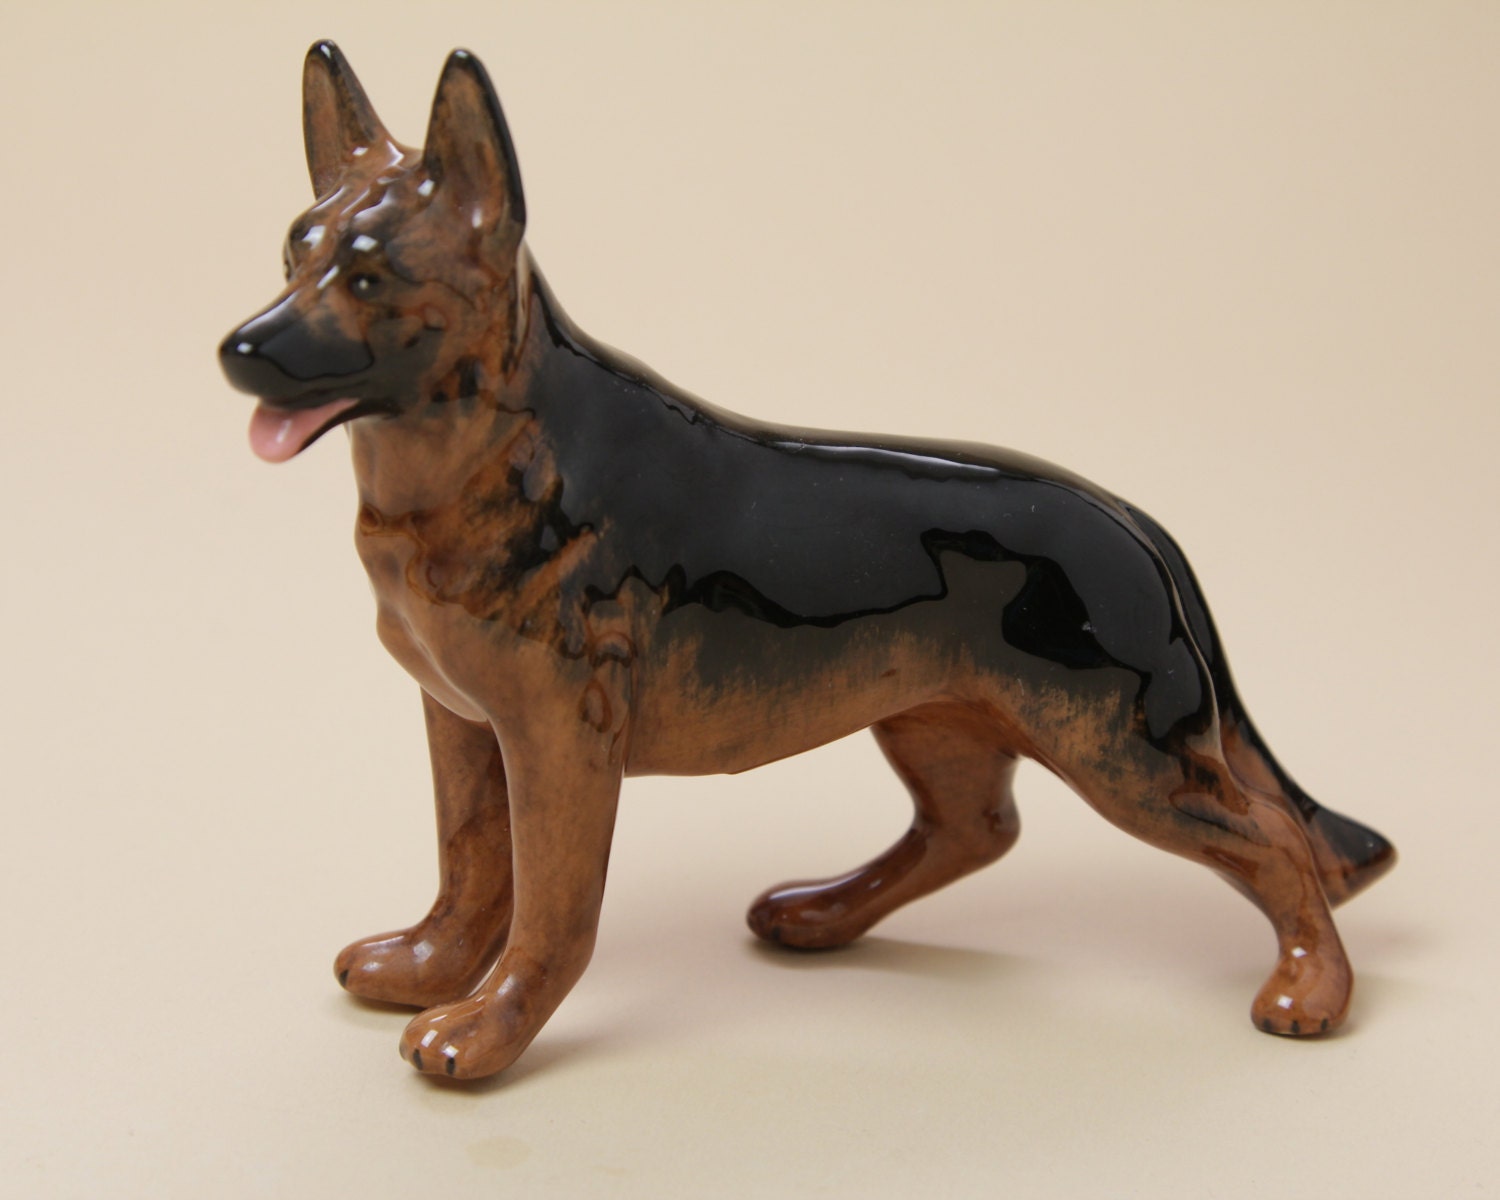 German shepherd figurine